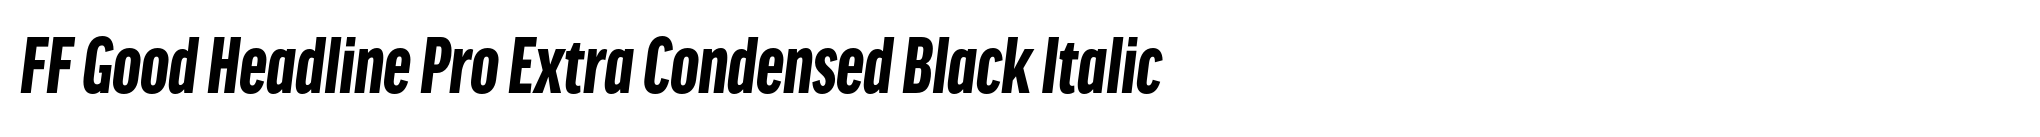 FF Good Headline Pro Extra Condensed Black Italic image